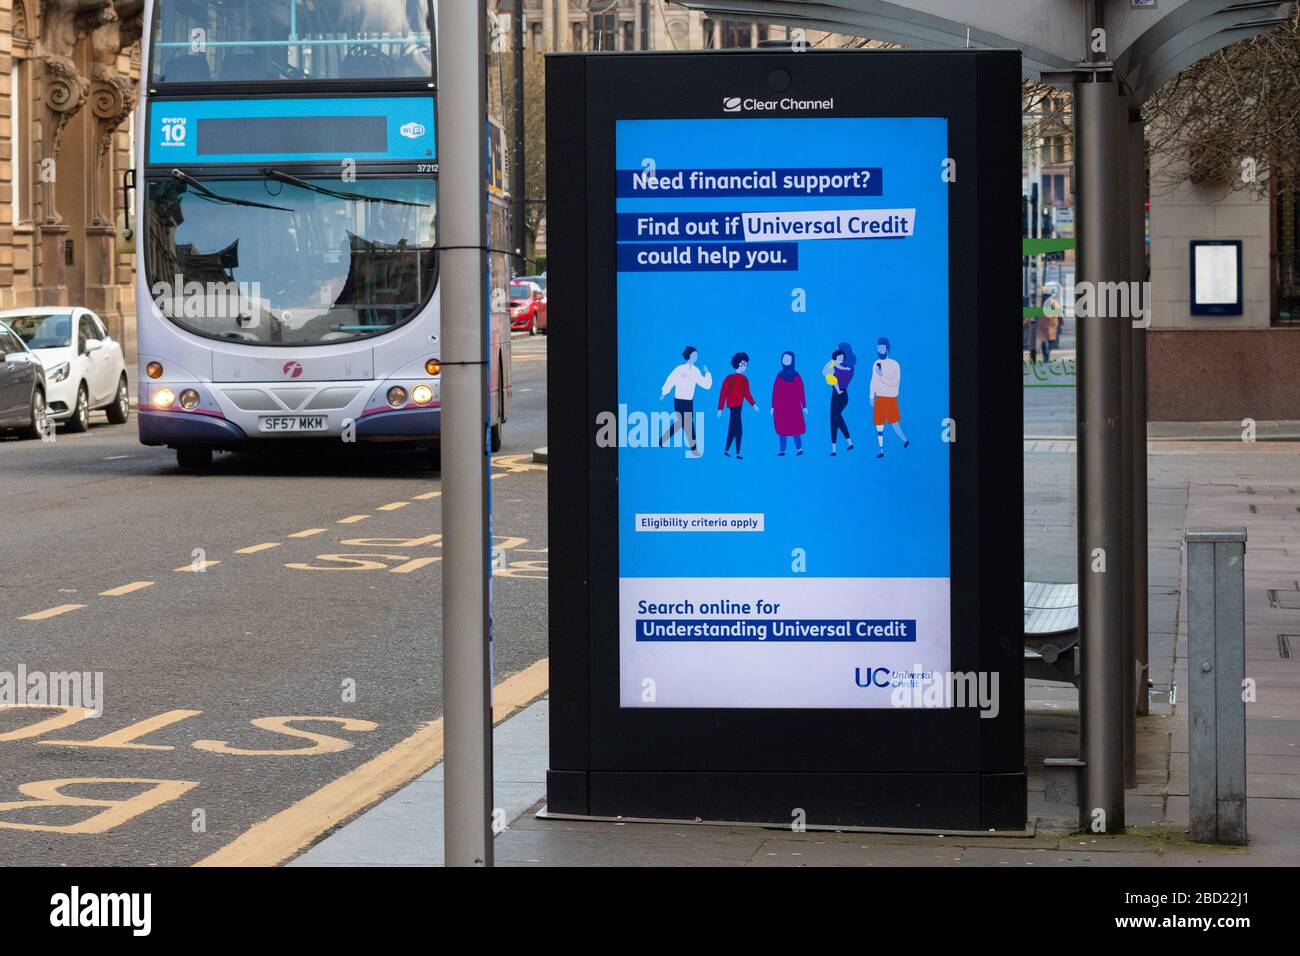 Universal credit advertising on bus shelter in Glasgow, Scotland, UK Stock Photo